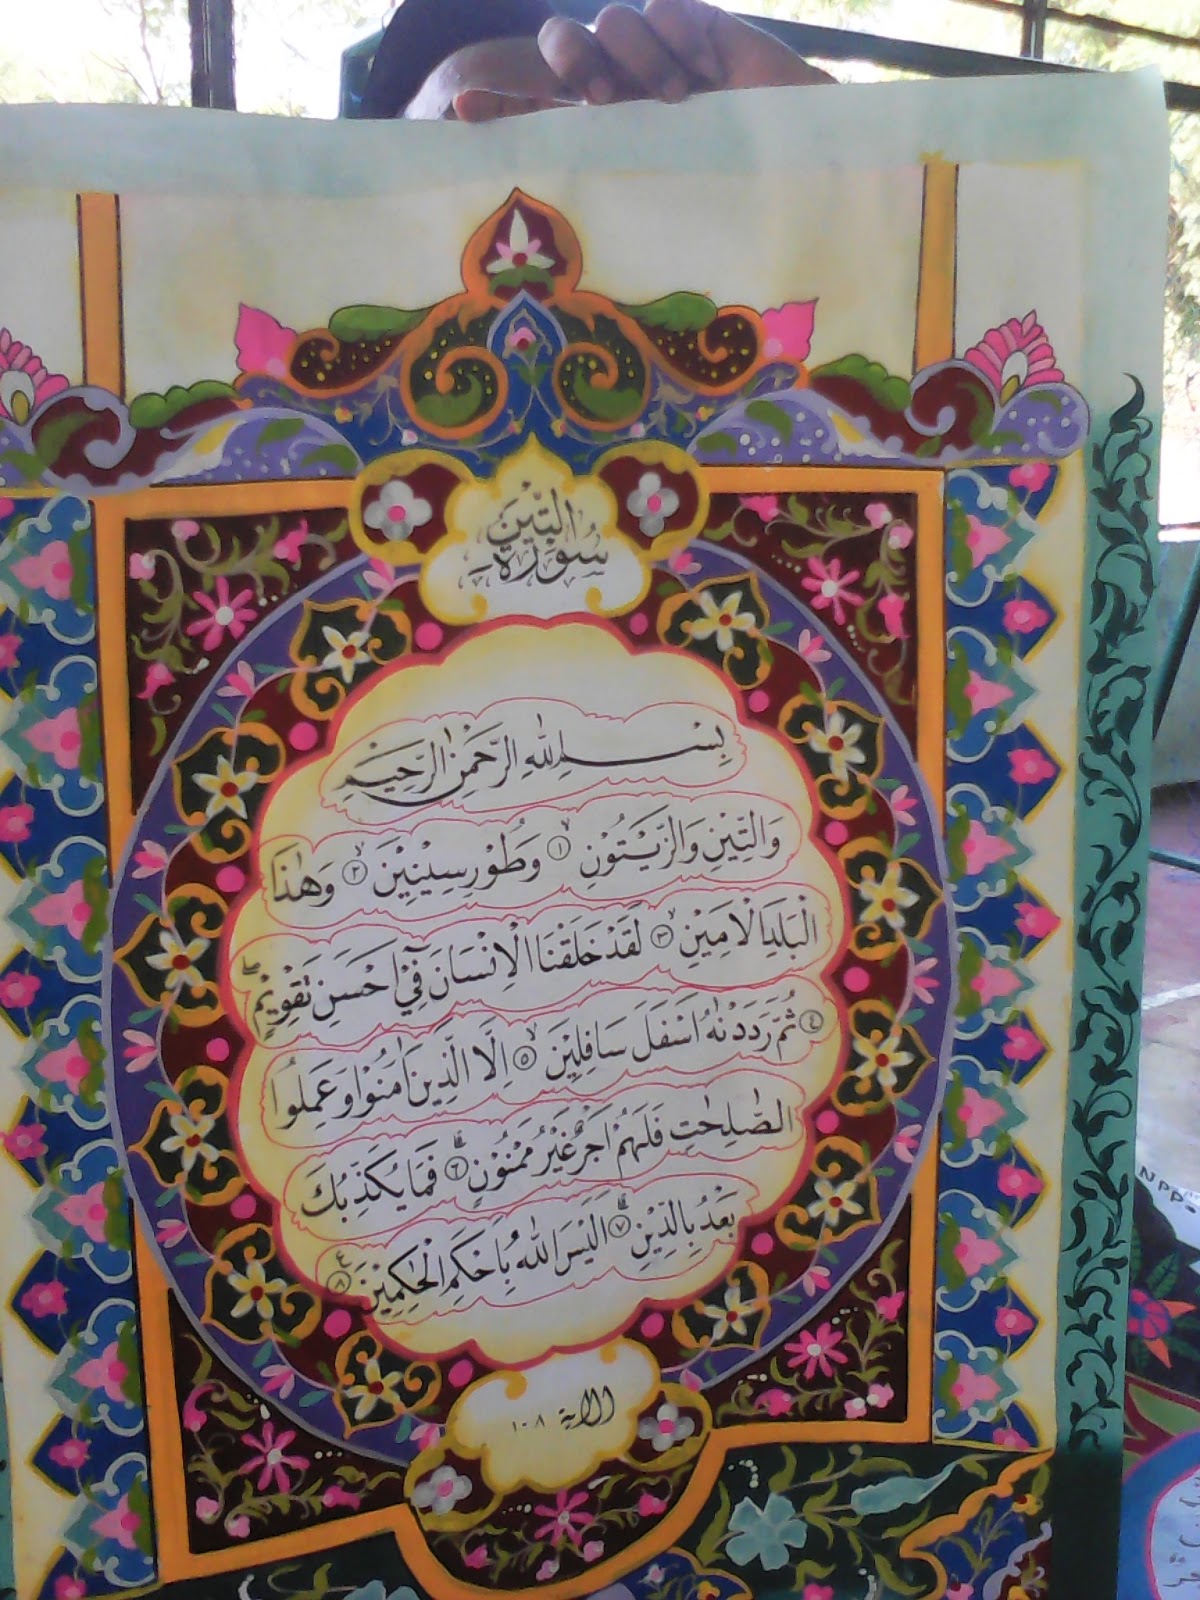 macam-macam seni islam (kalighrafi): KARYA SENI KALIGRAFI MUSHAF